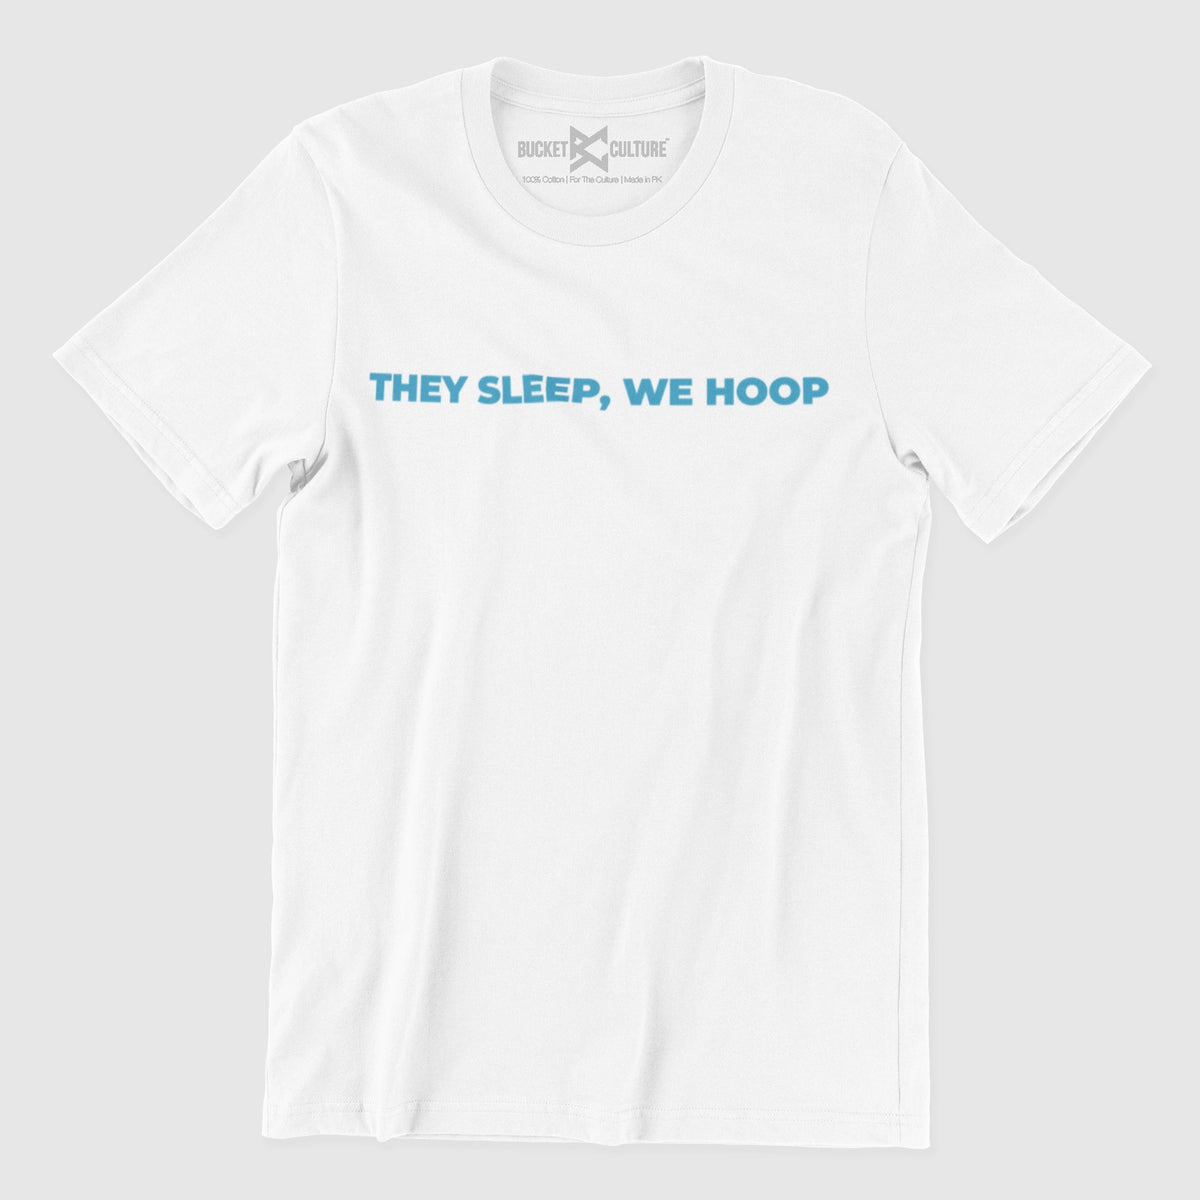 We Hoop T-Shirt